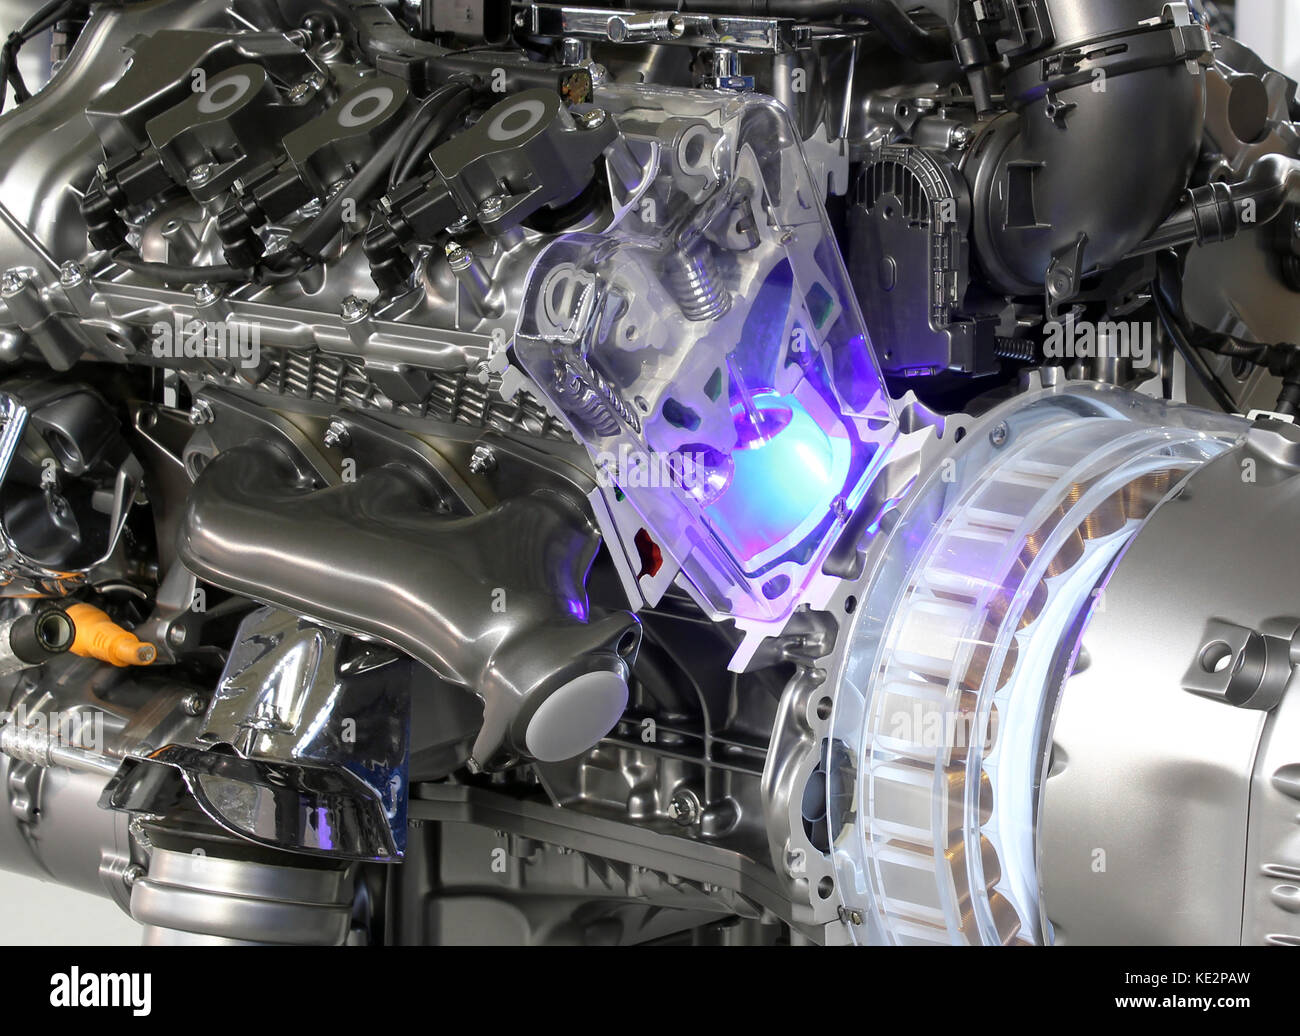 powerful v6 car hybrid engine Stock Photo